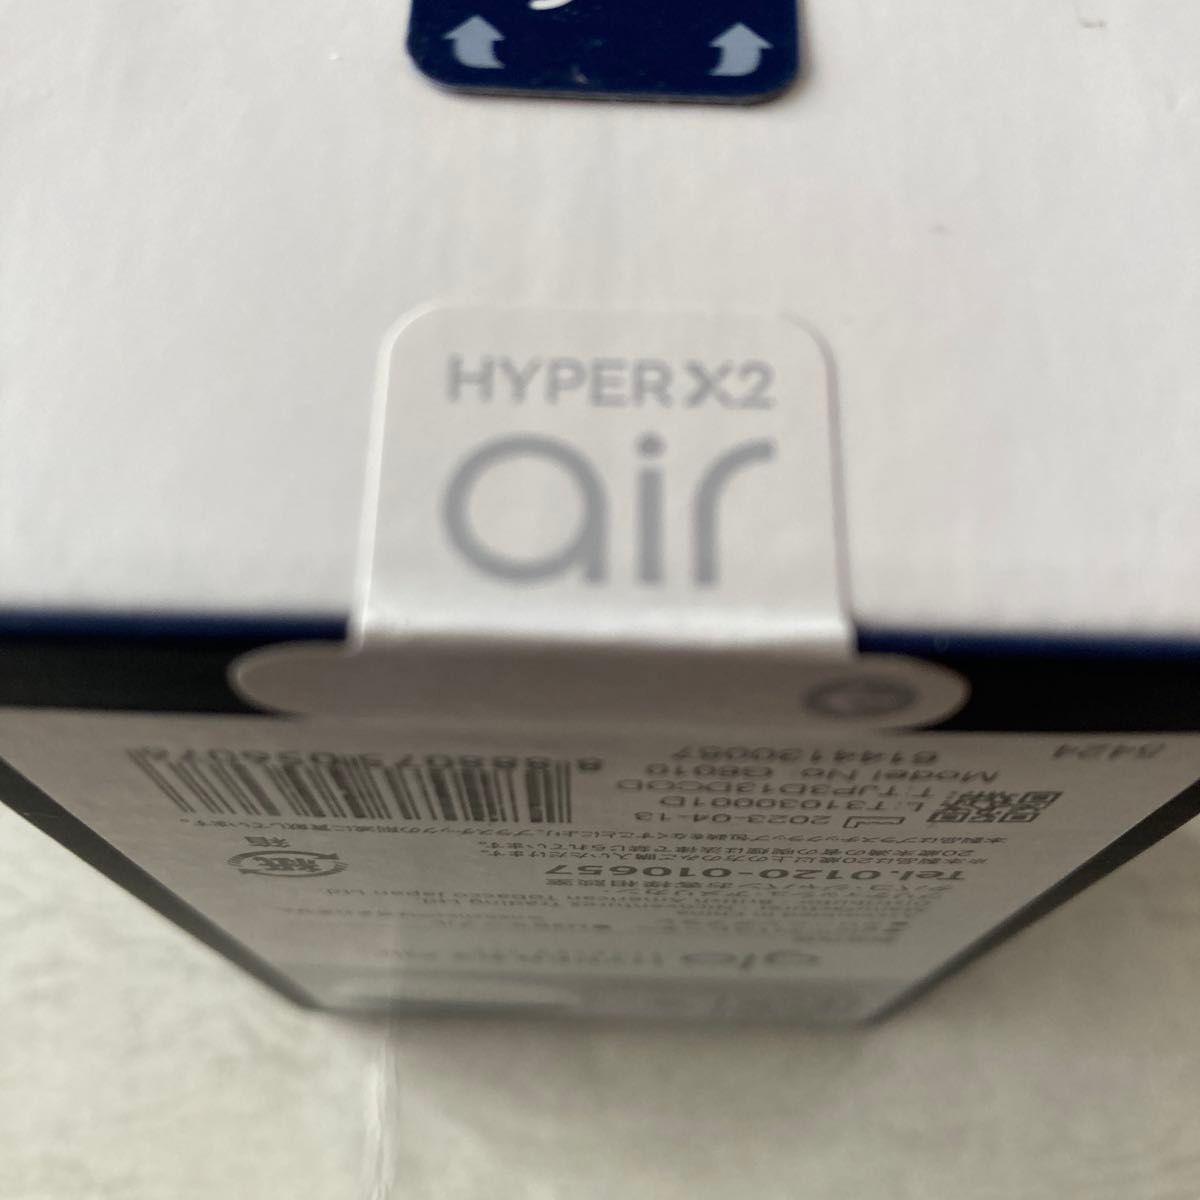 glo hyper air グロー ハイパー エア　ブルー系　新品未開封を解体して箱無し発送です　管理01290